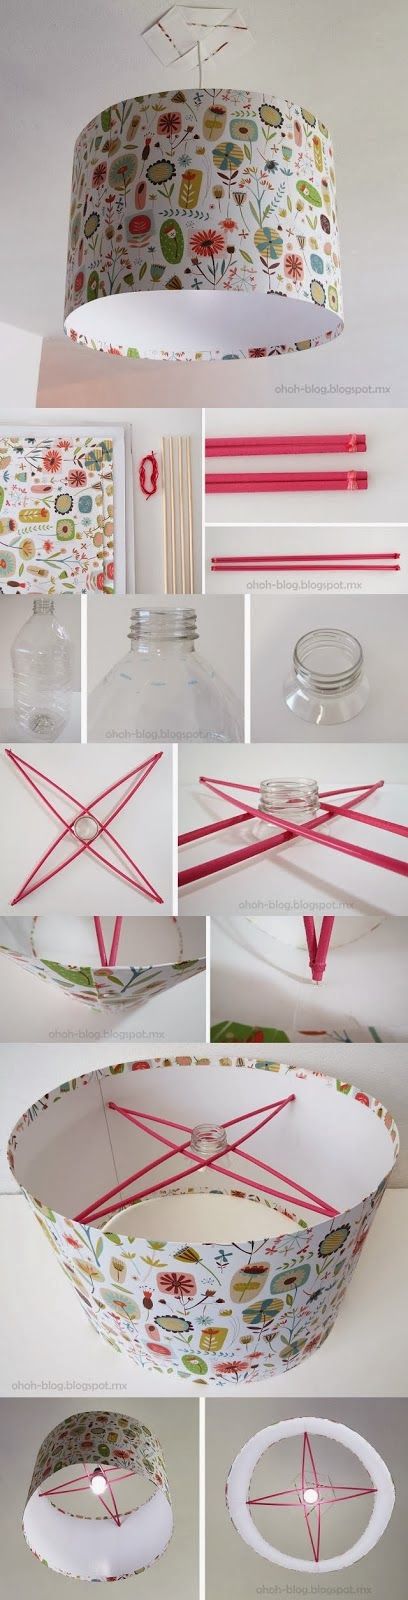 How to make beautiful lampshade | DIY & Crafts Tutorials --> www.ohohblog.com...